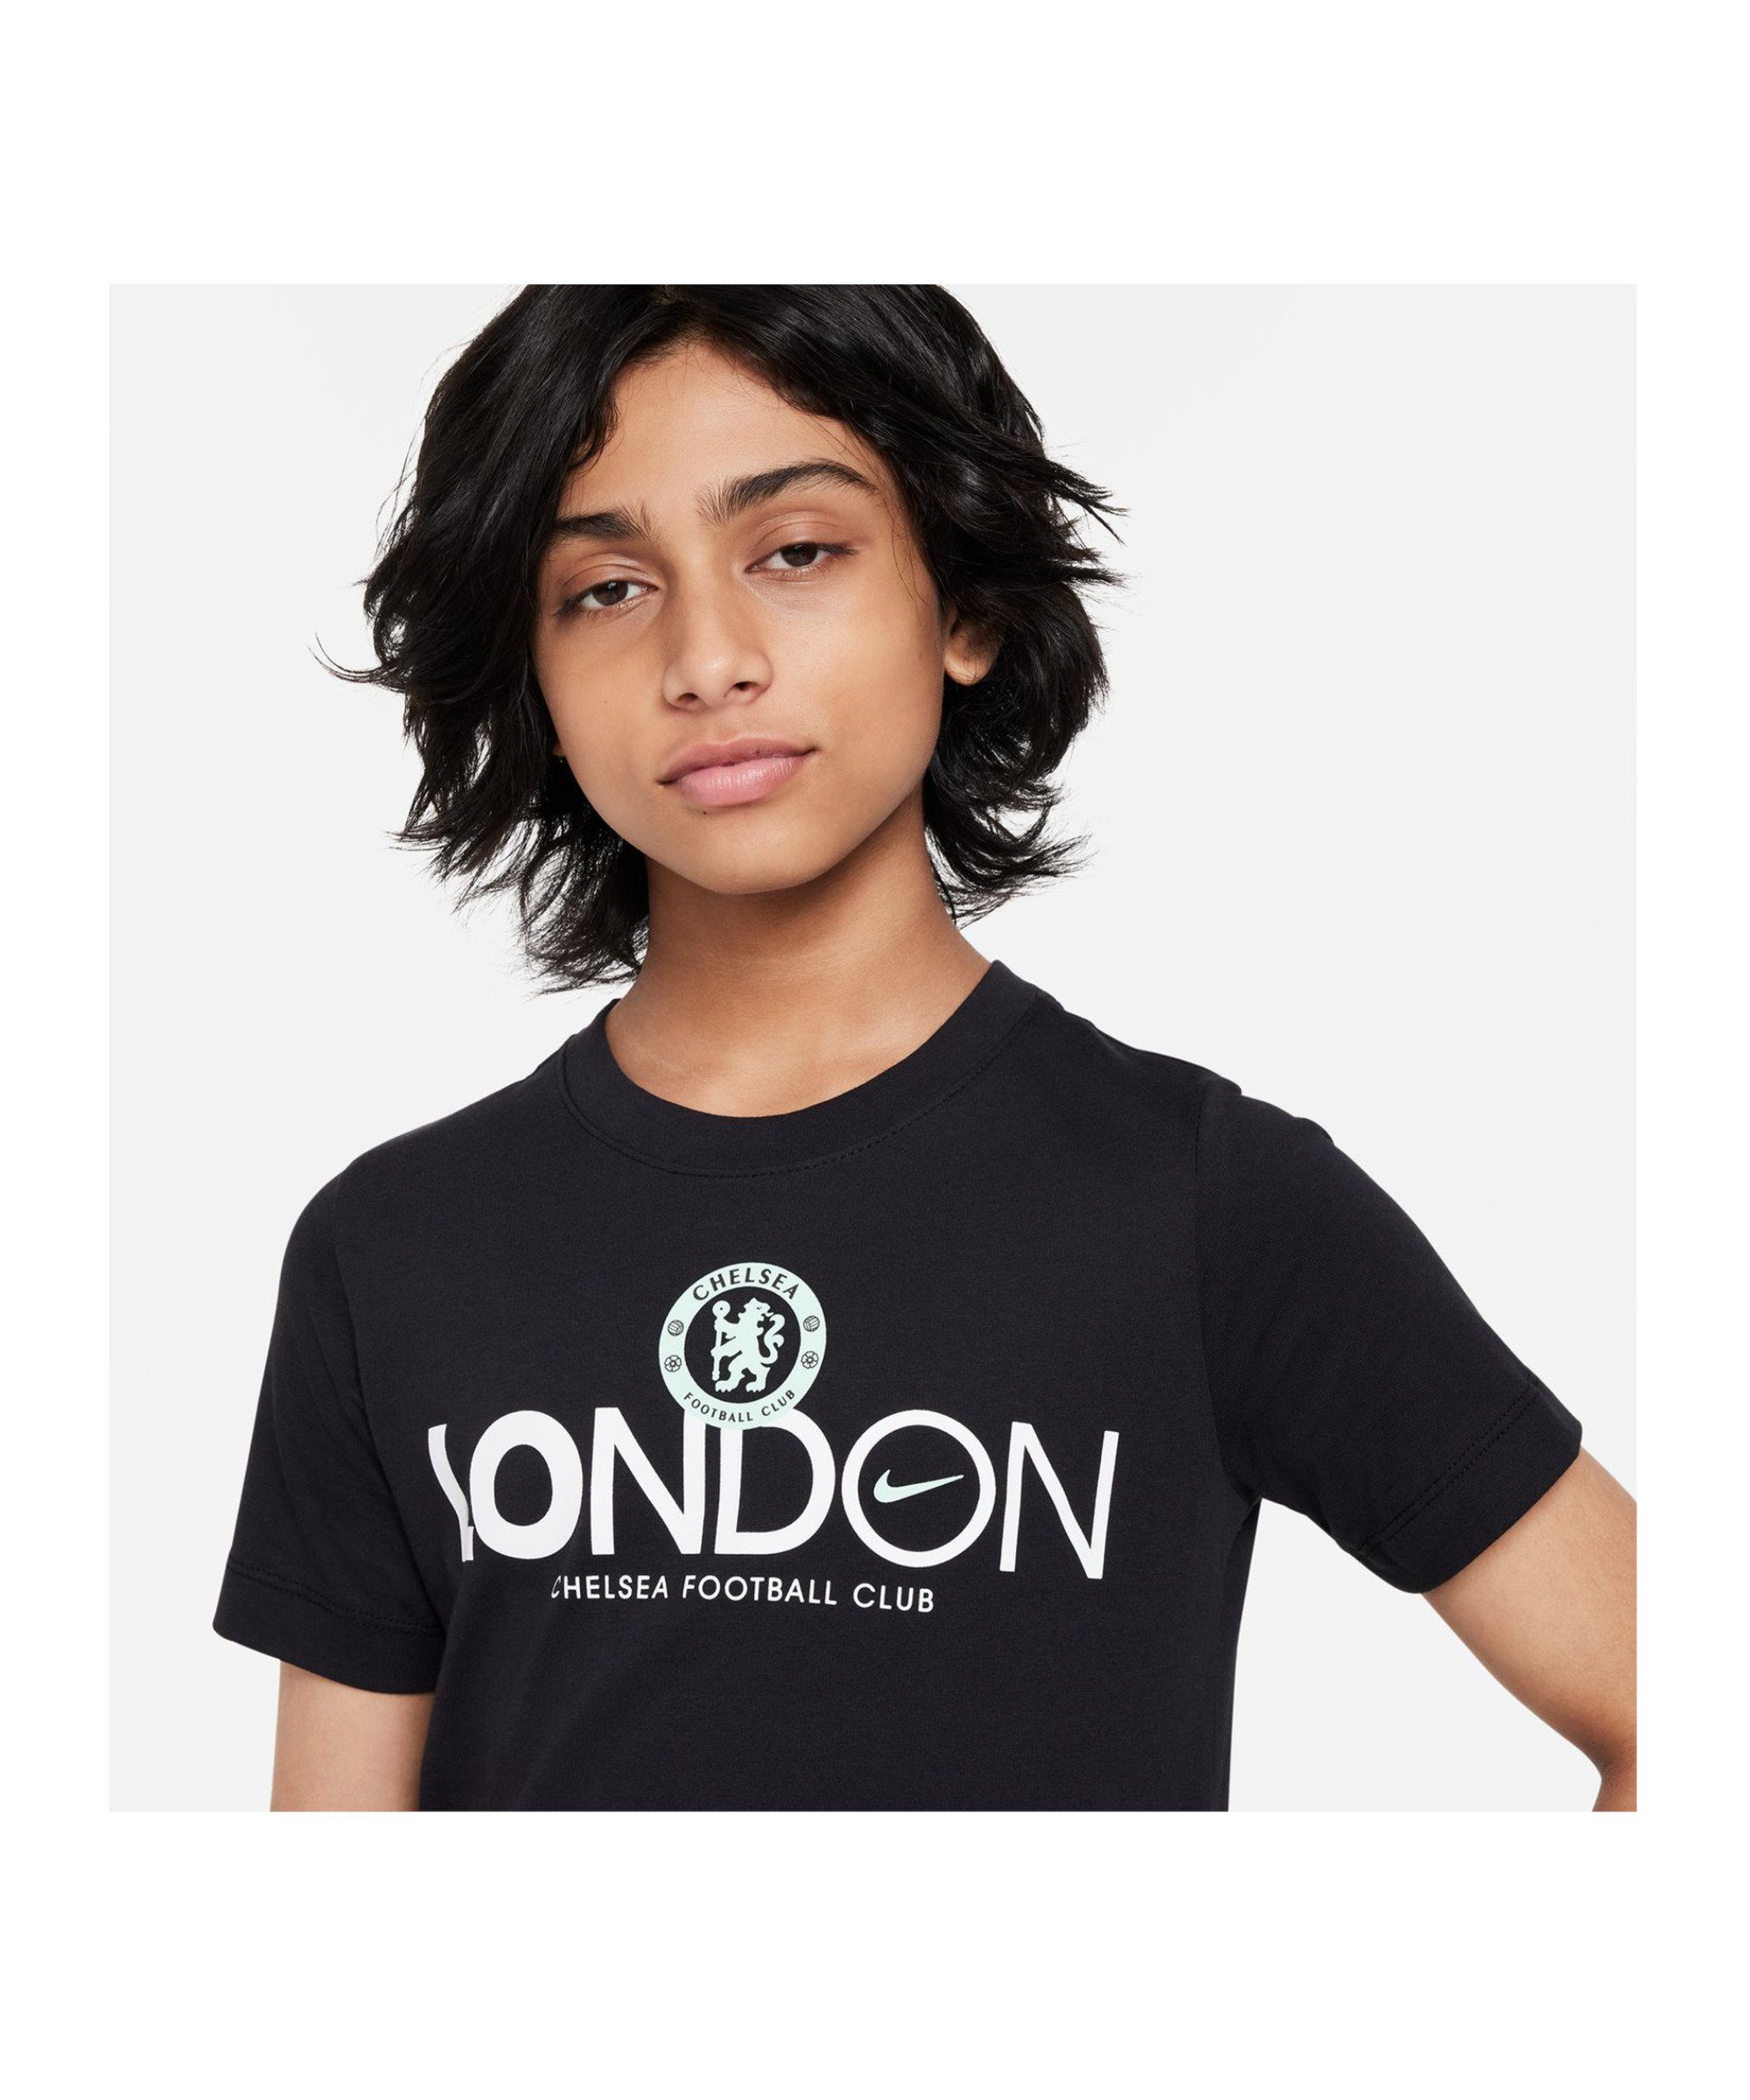 Nike T-Shirt FC Chelsea London Kids default T-Shirt Mercurial